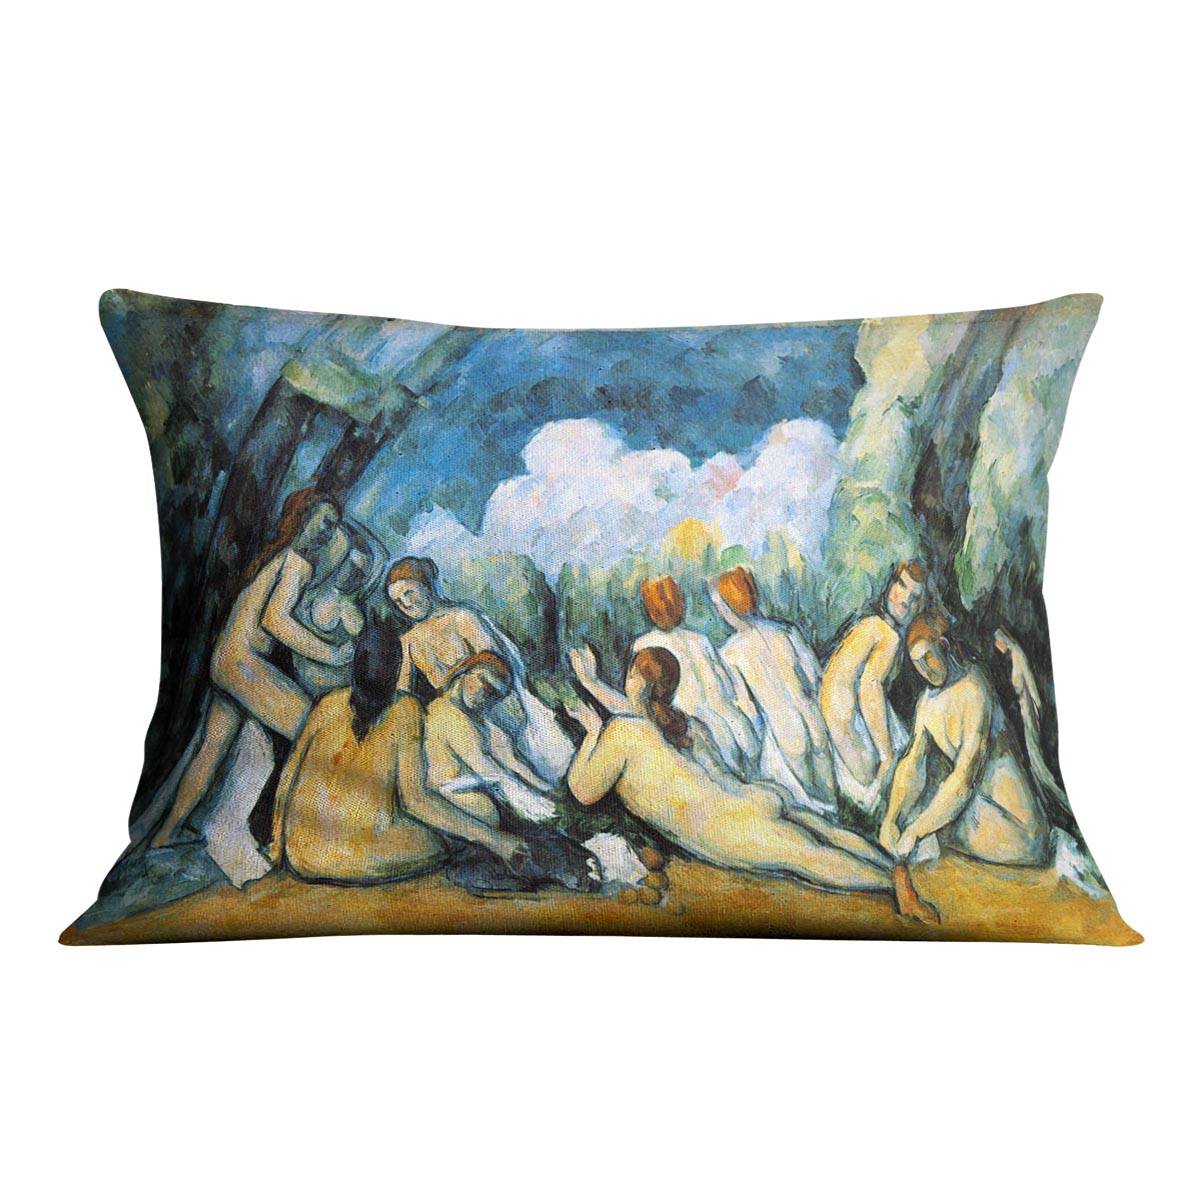 Large Bathers by Cezanne Cushion